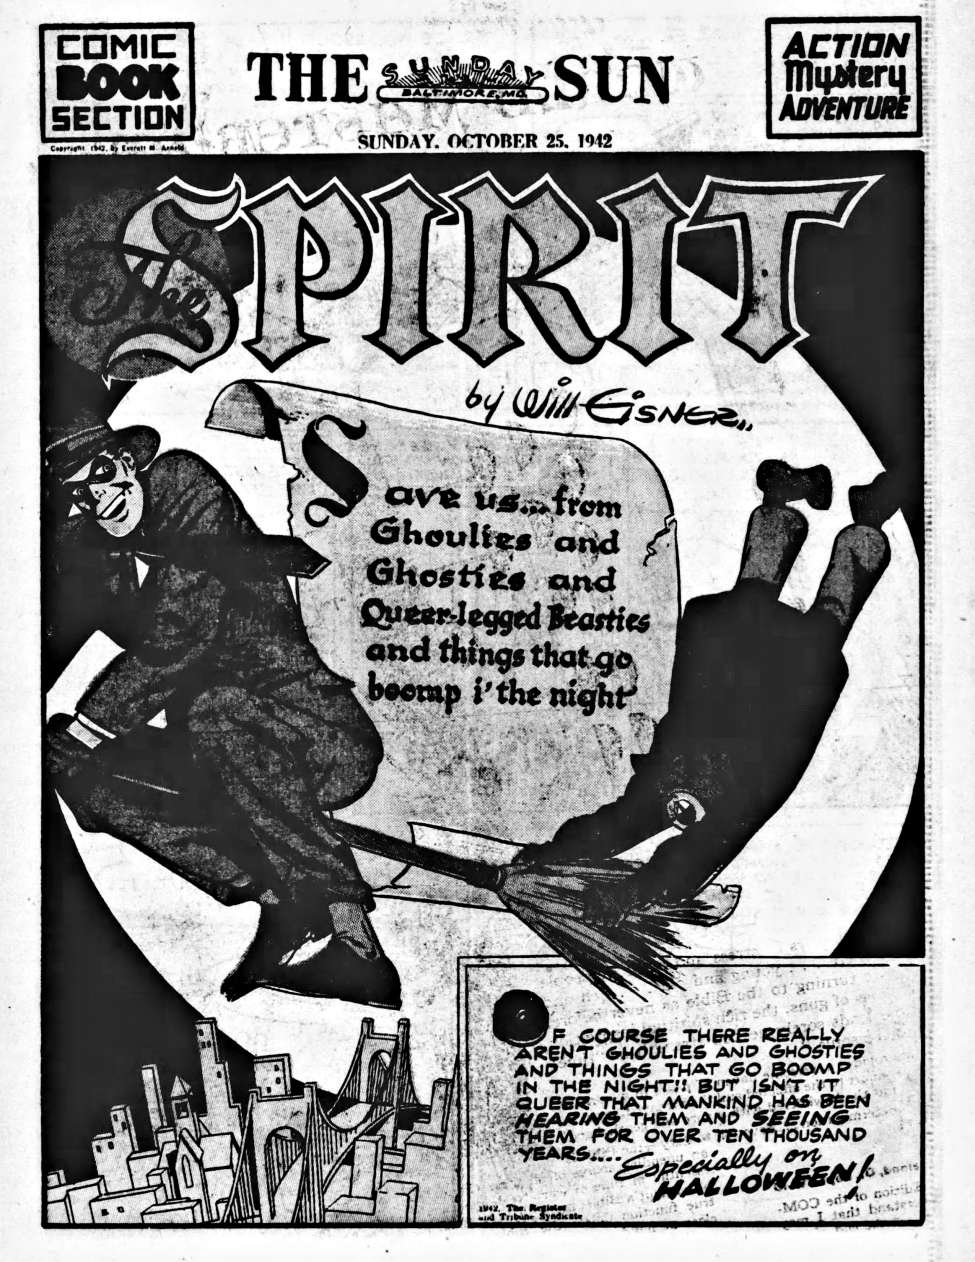 Book Cover For The Spirit (1942-10-25) - Baltimore Sun (b/w)